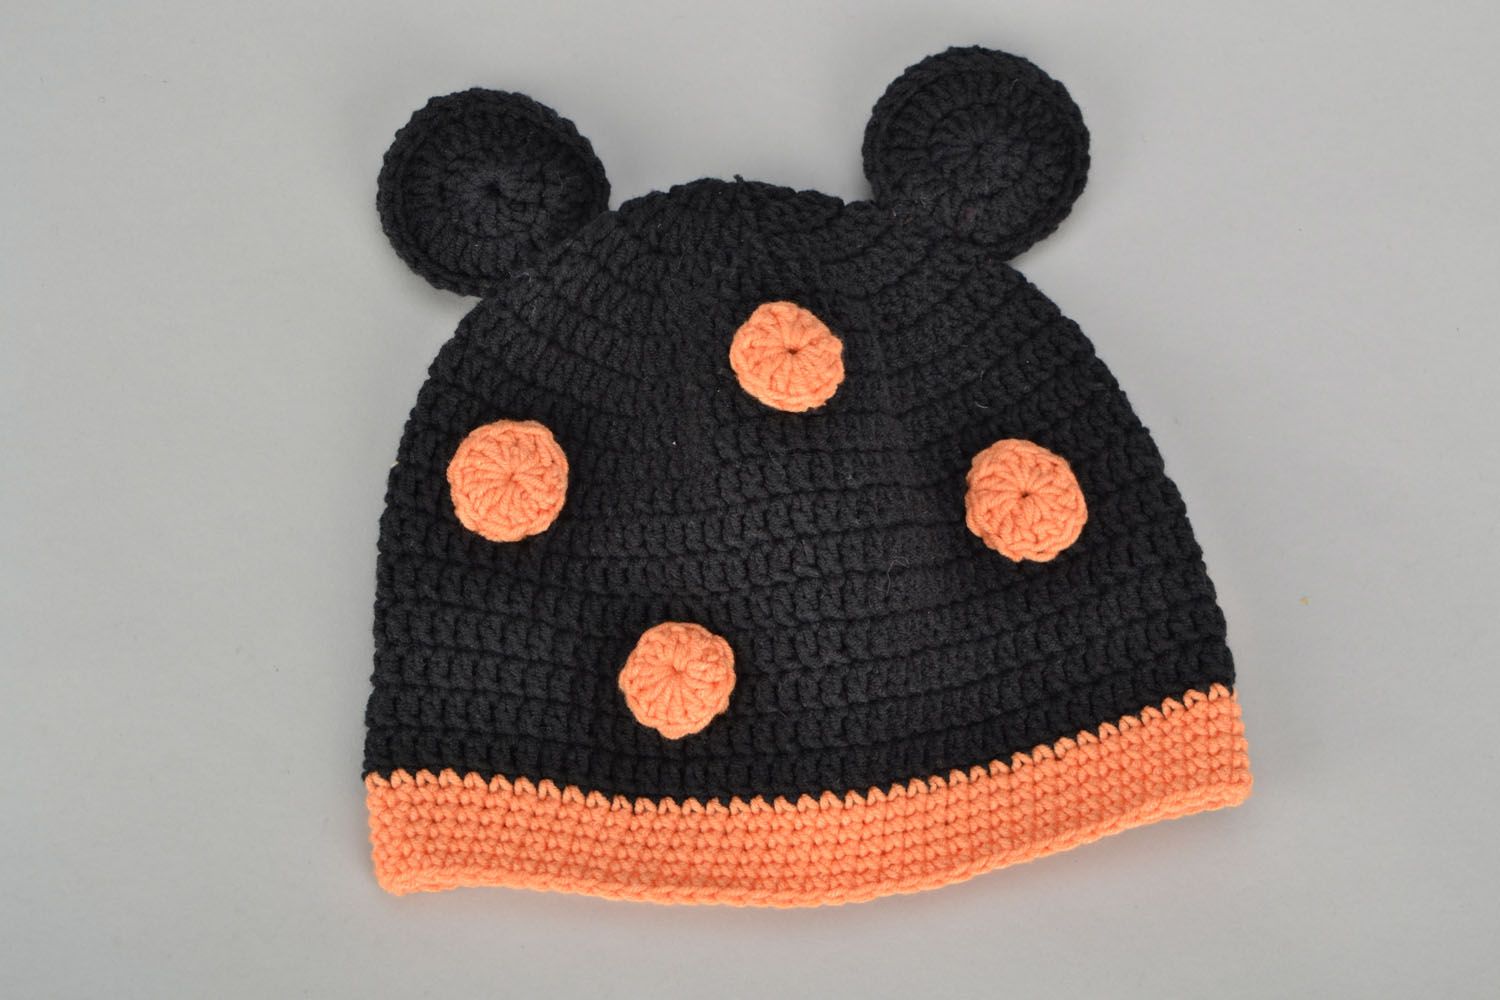 Crochet children's hat Black with Ears photo 2